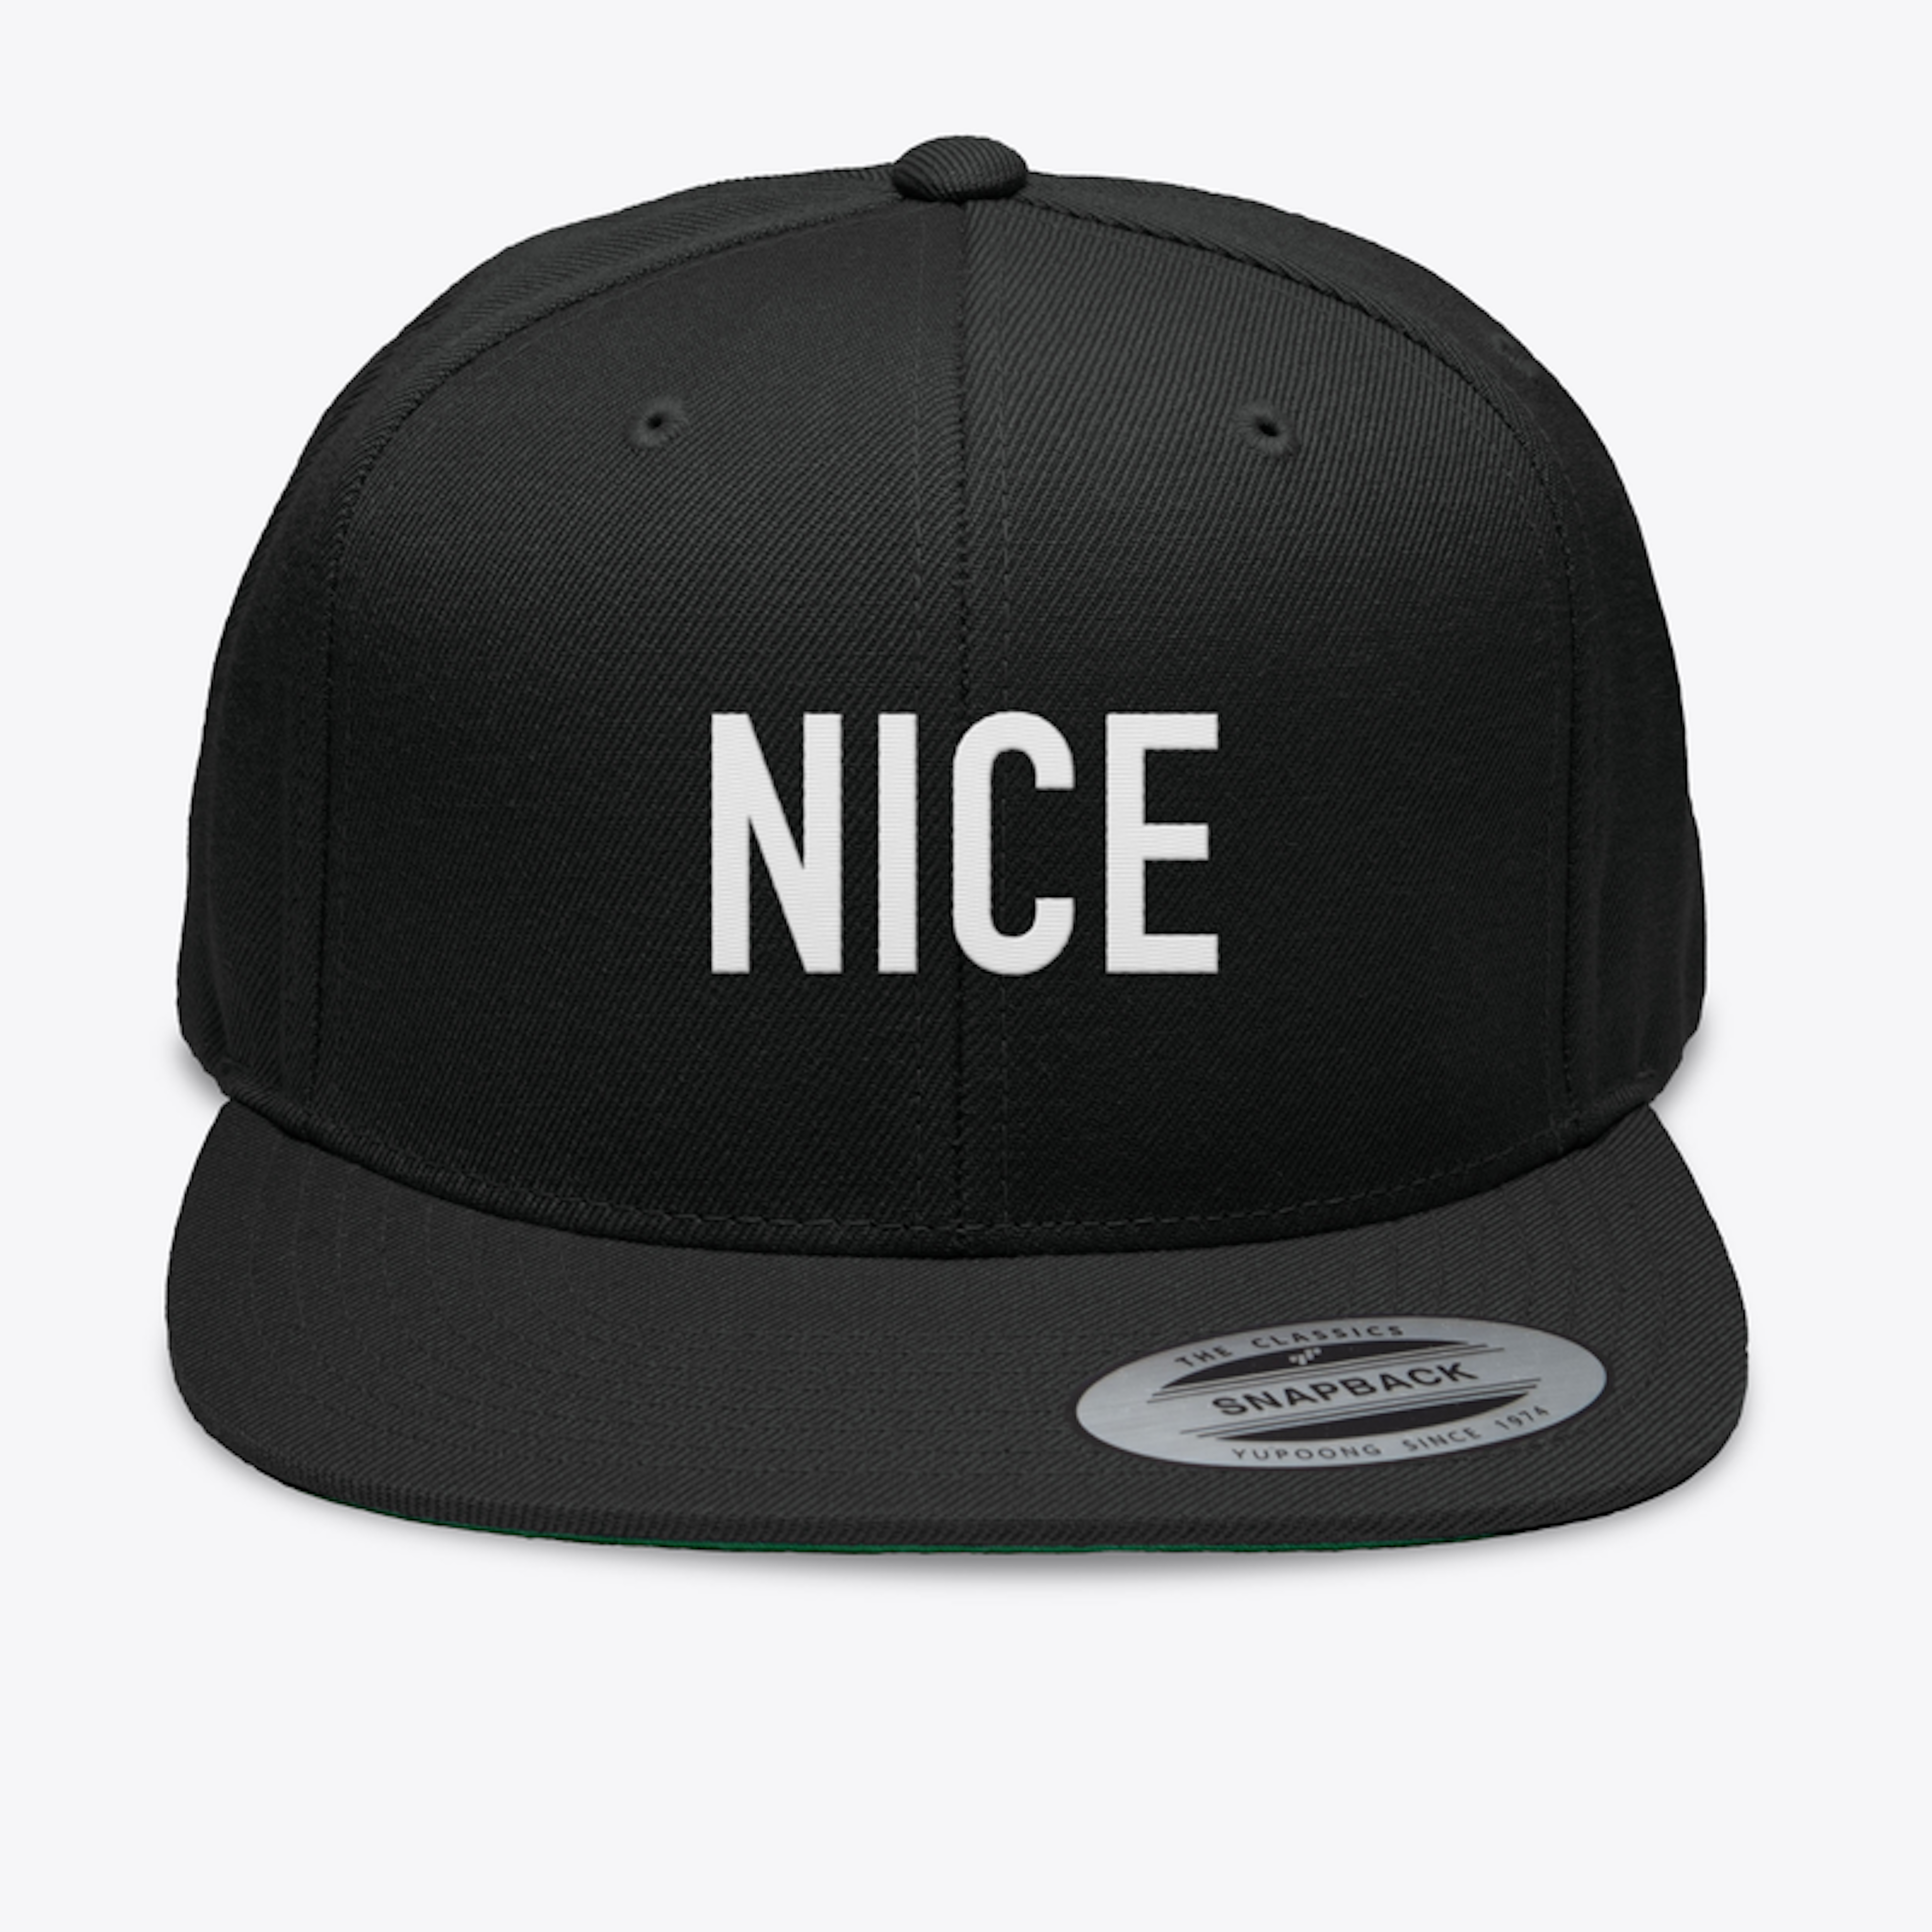 NICE Hat